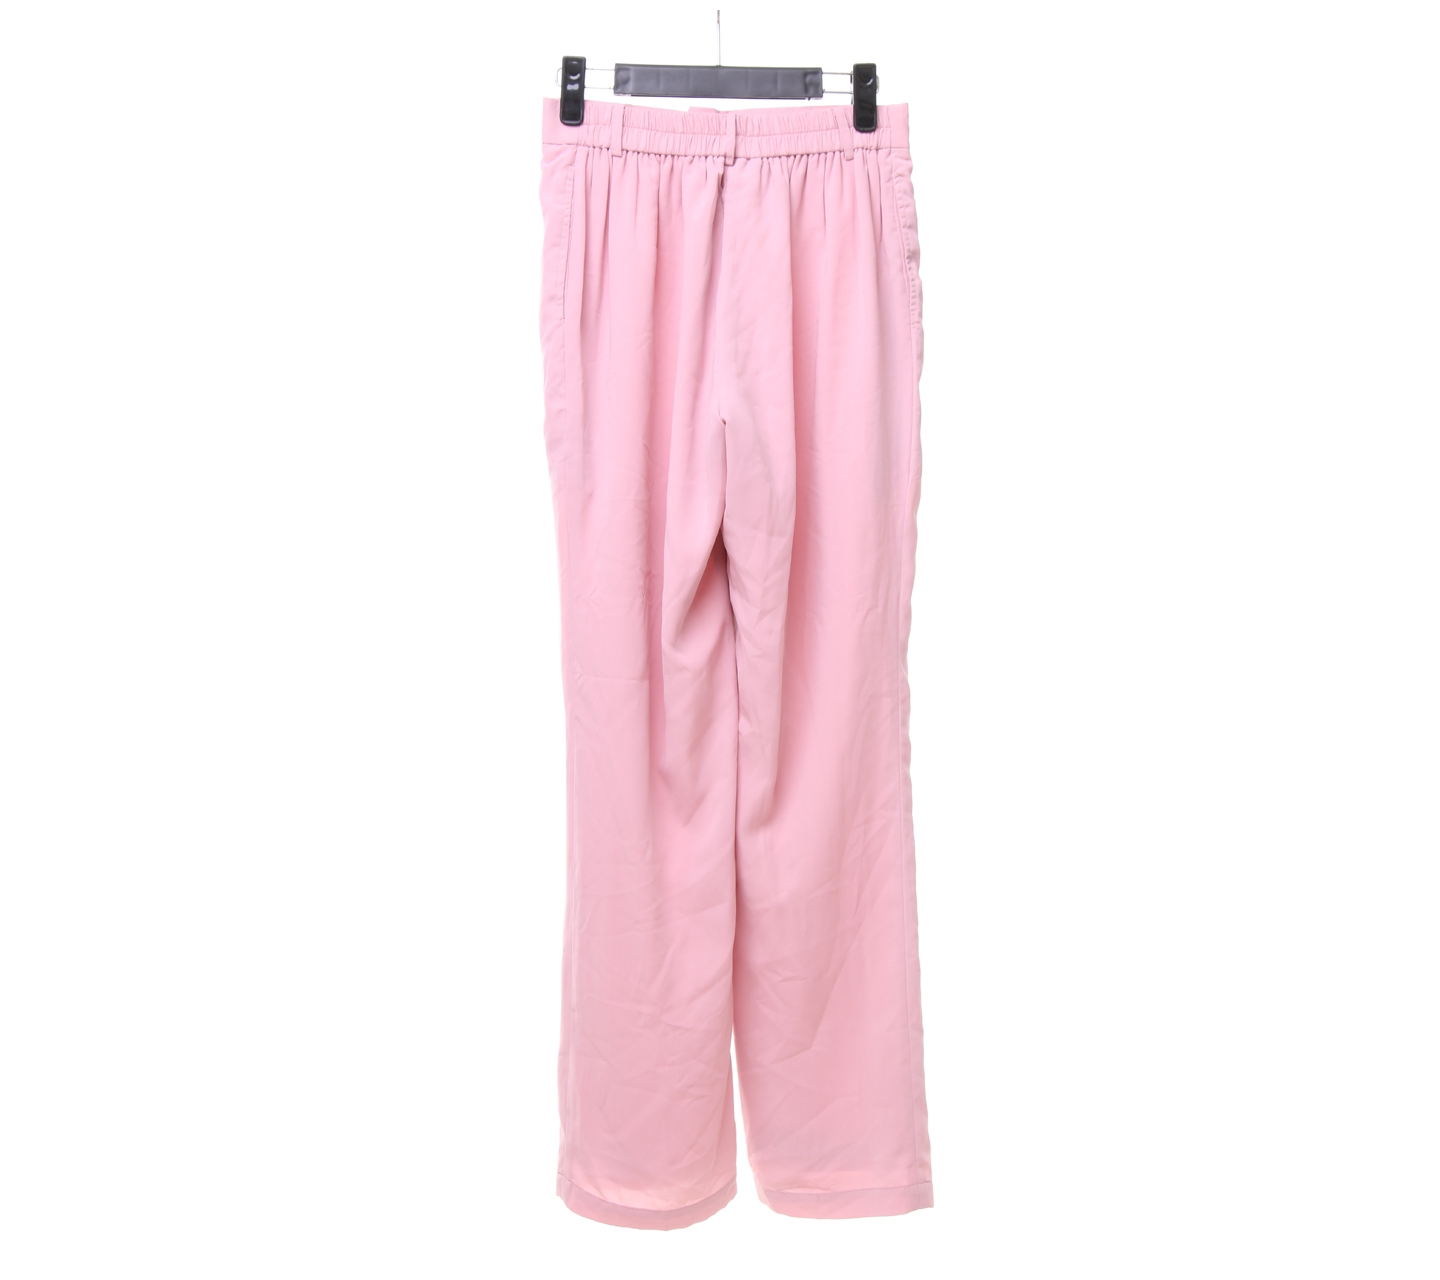 ATS The Label Pink Long Pants